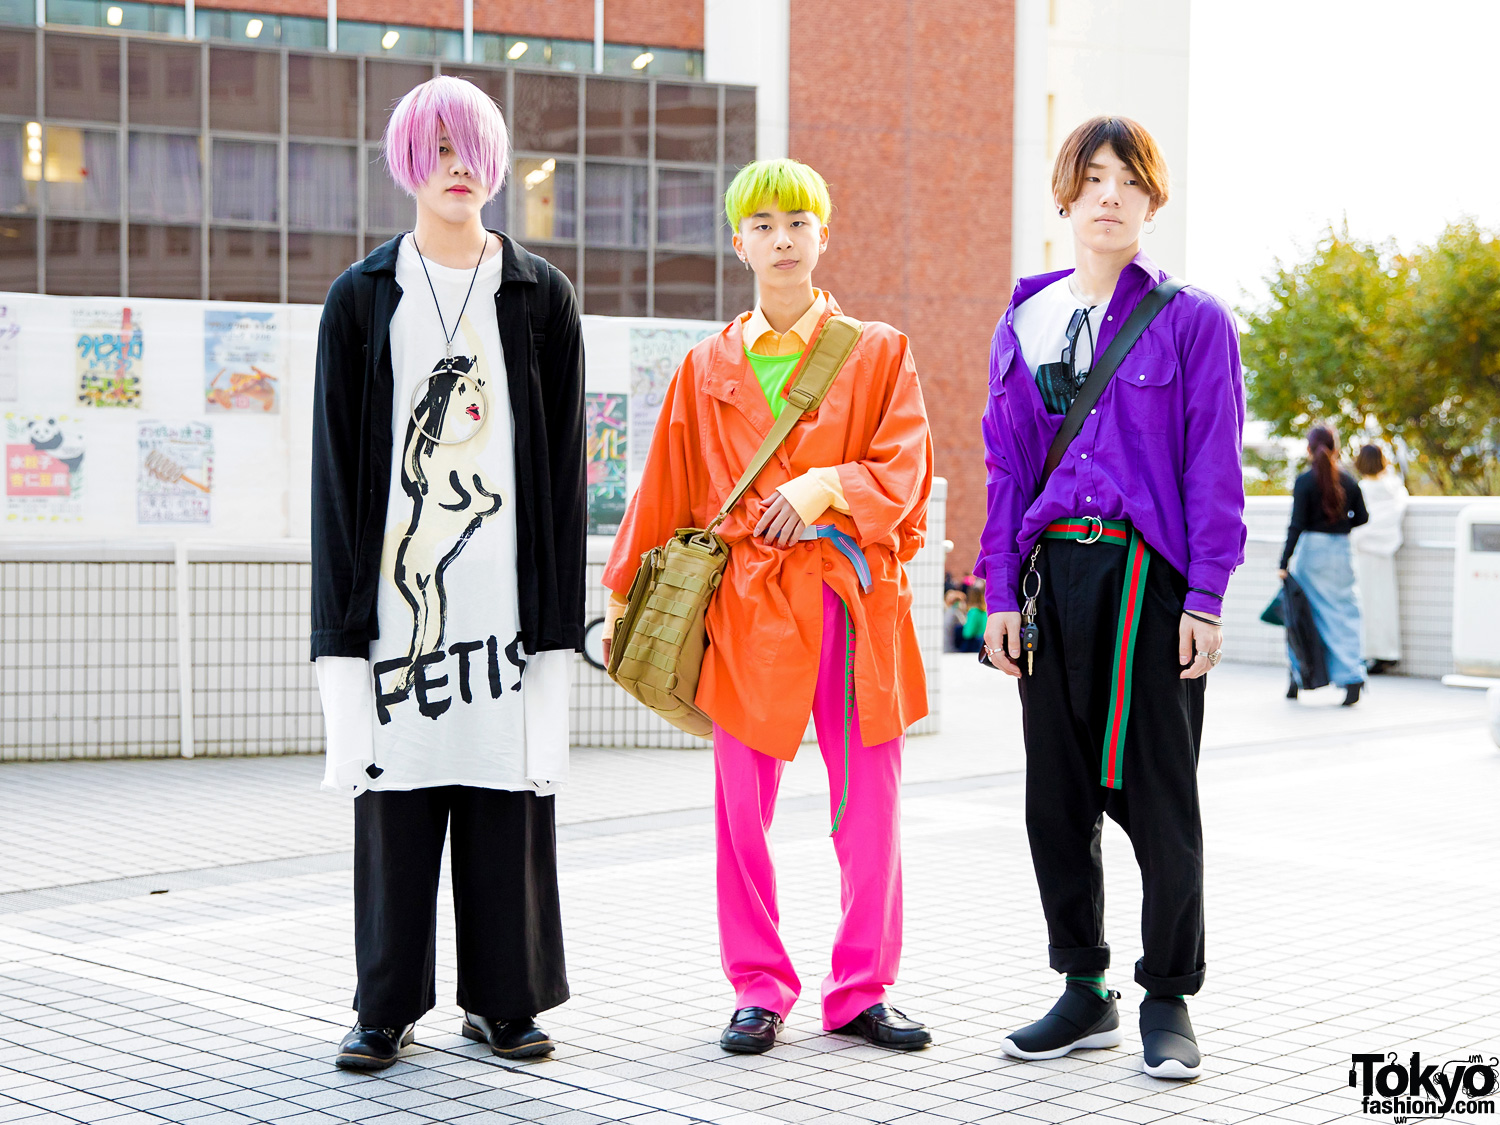 Japanese Teen Streetwear & Colorful Hairstyles in Tokyo w/ Fetis, Monomania, WEGO & Vintage Fashion